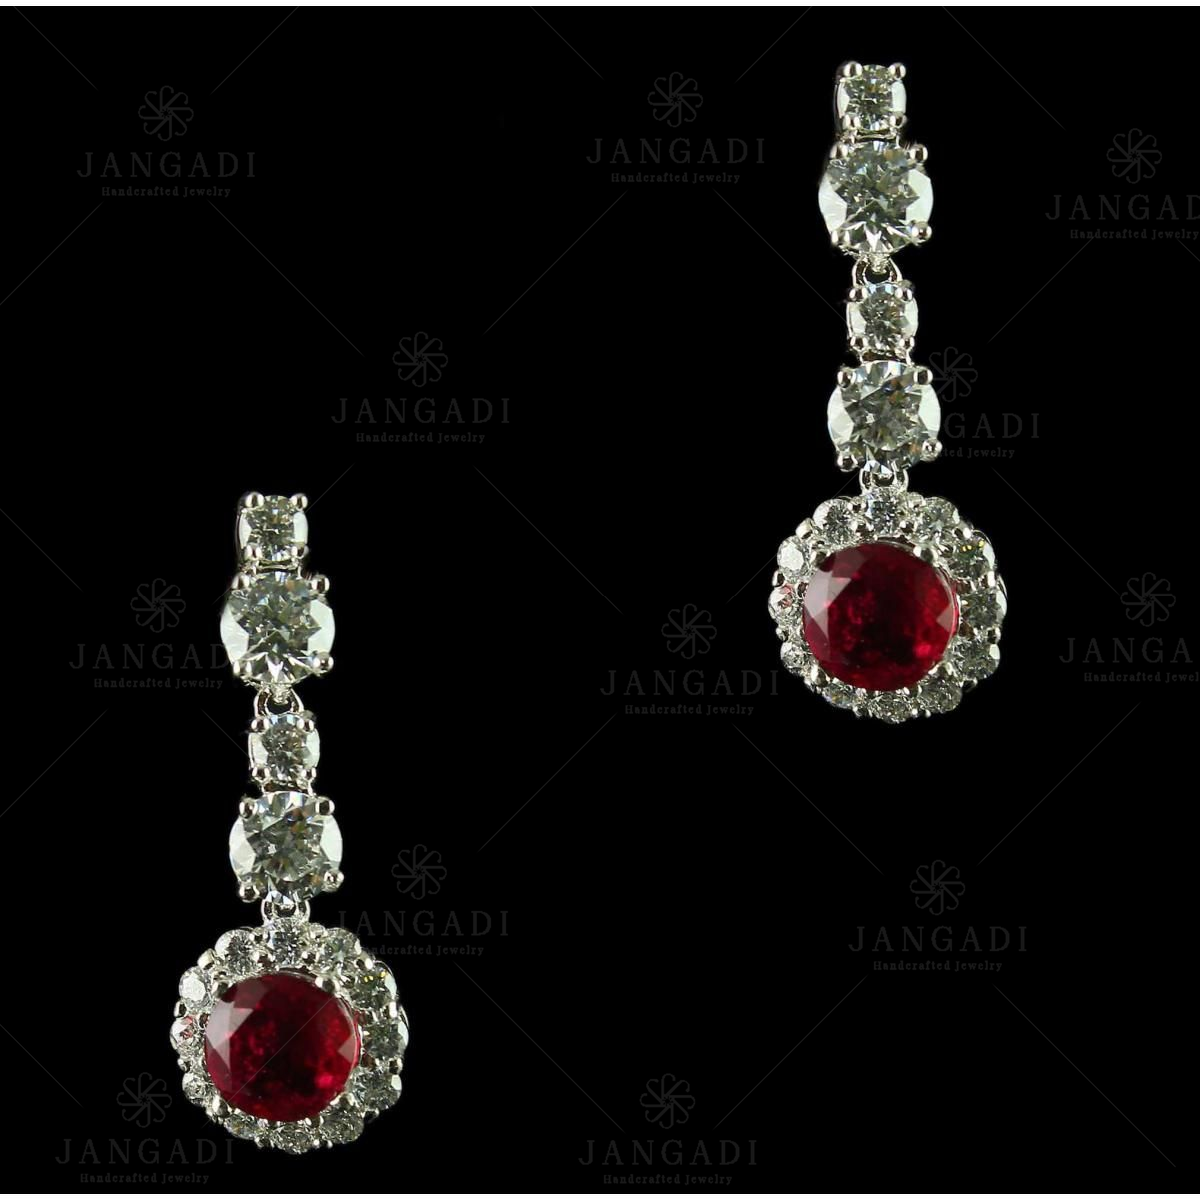 Seville Earrings, Silver & Swarovski Crystals | Moonrise Jewelry